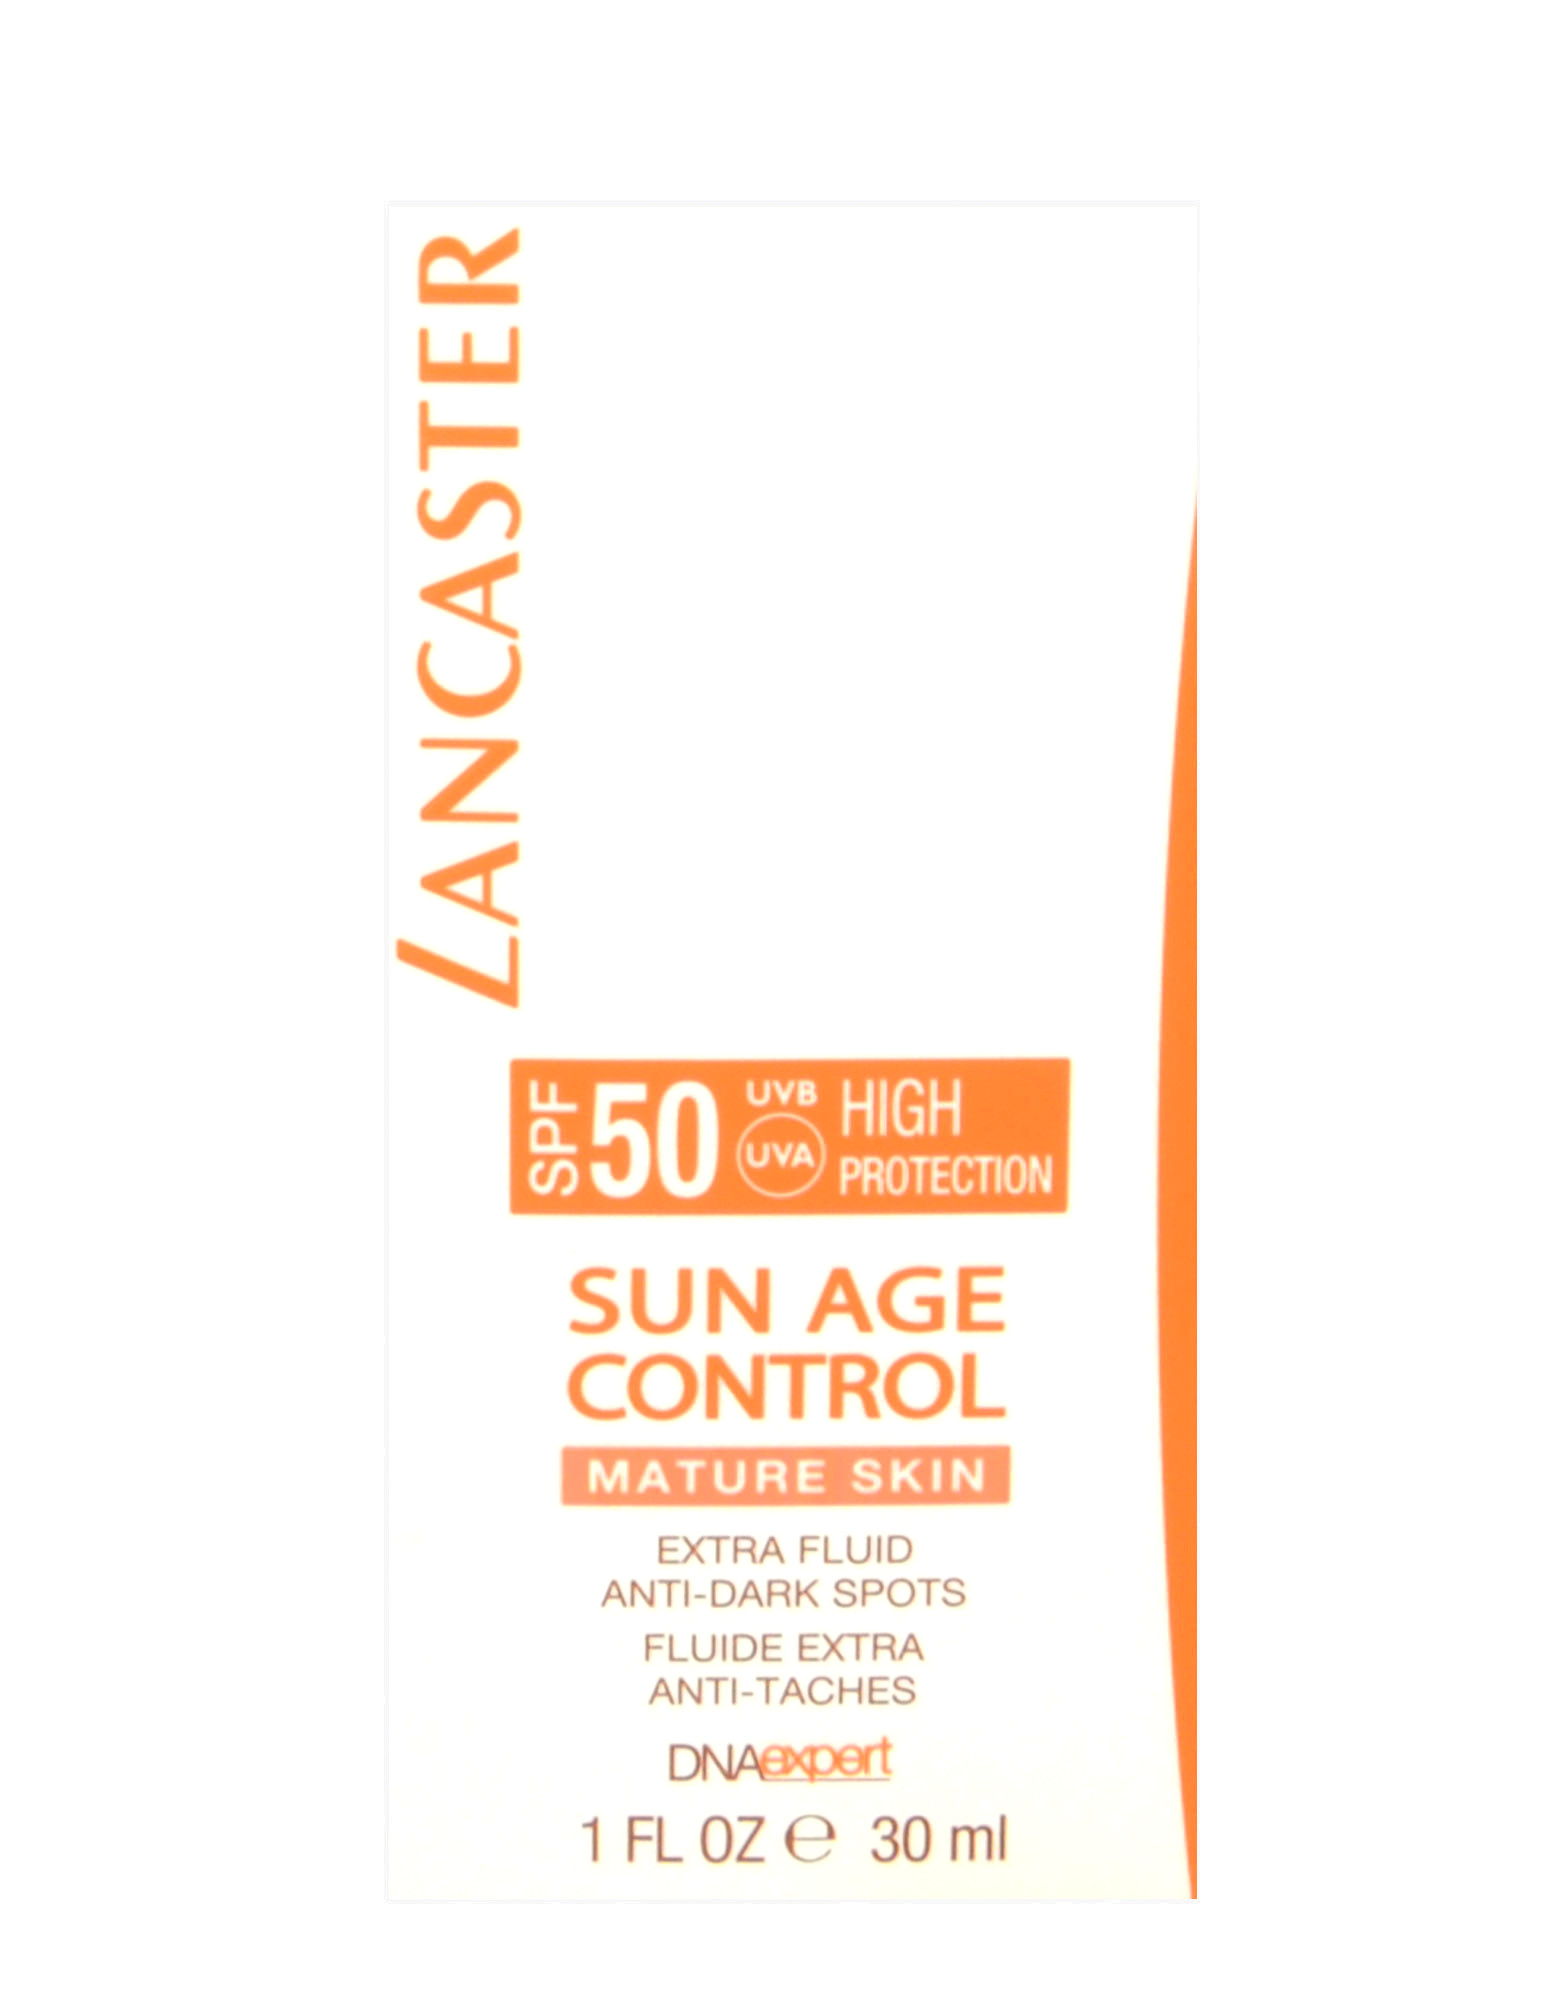 Kwelling Dreigend Ademen Sun Age Control SPF 50 by Lancaster, 30ml - iafstore.com